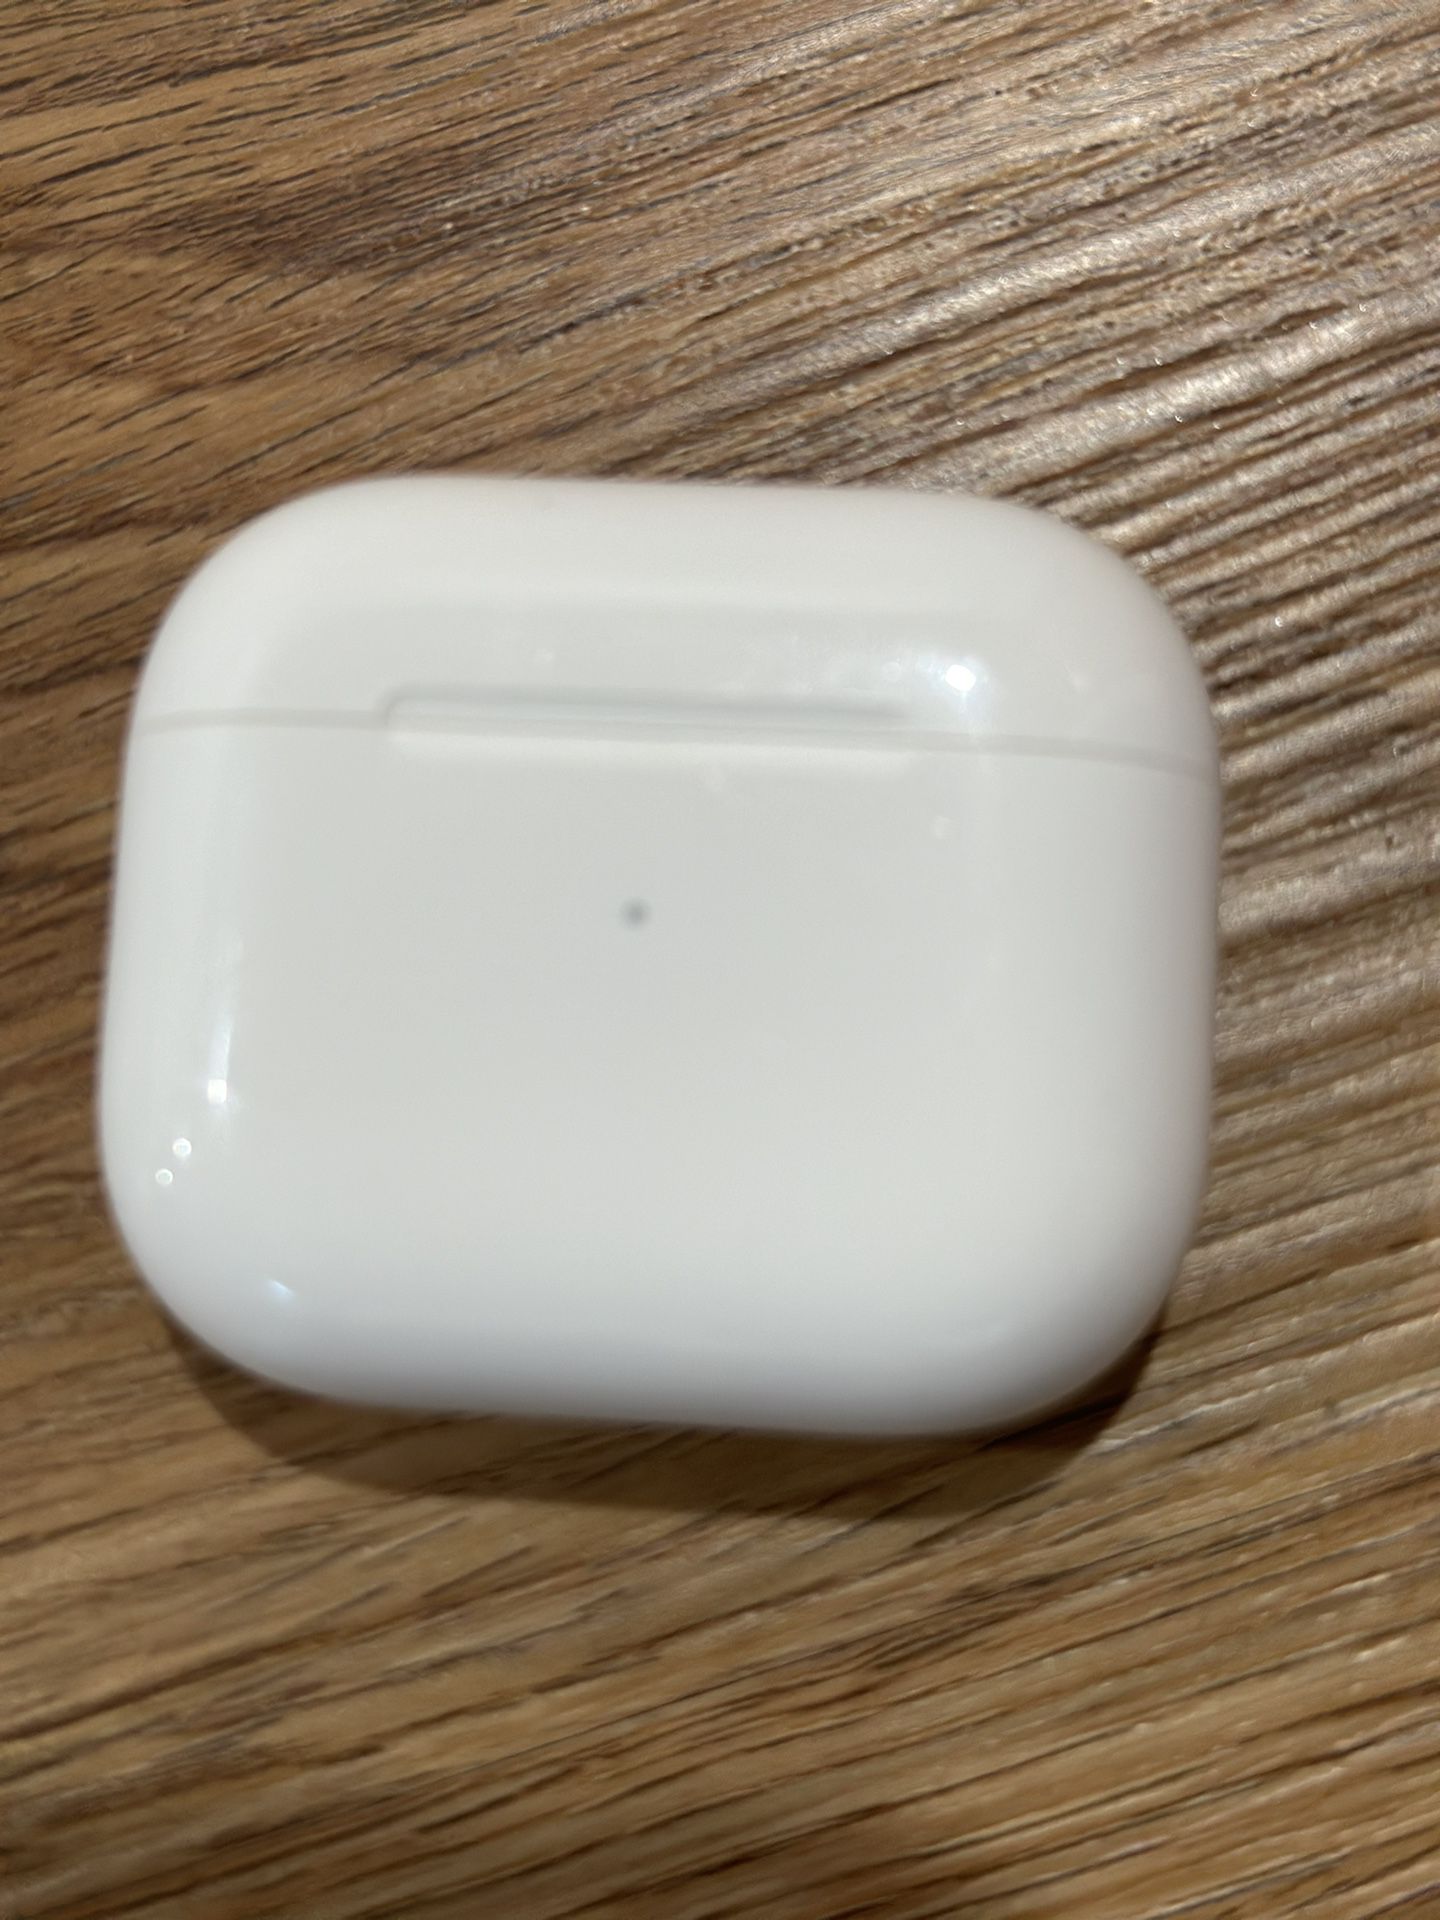 AirPod Wireless Charging Case - Gen 3 